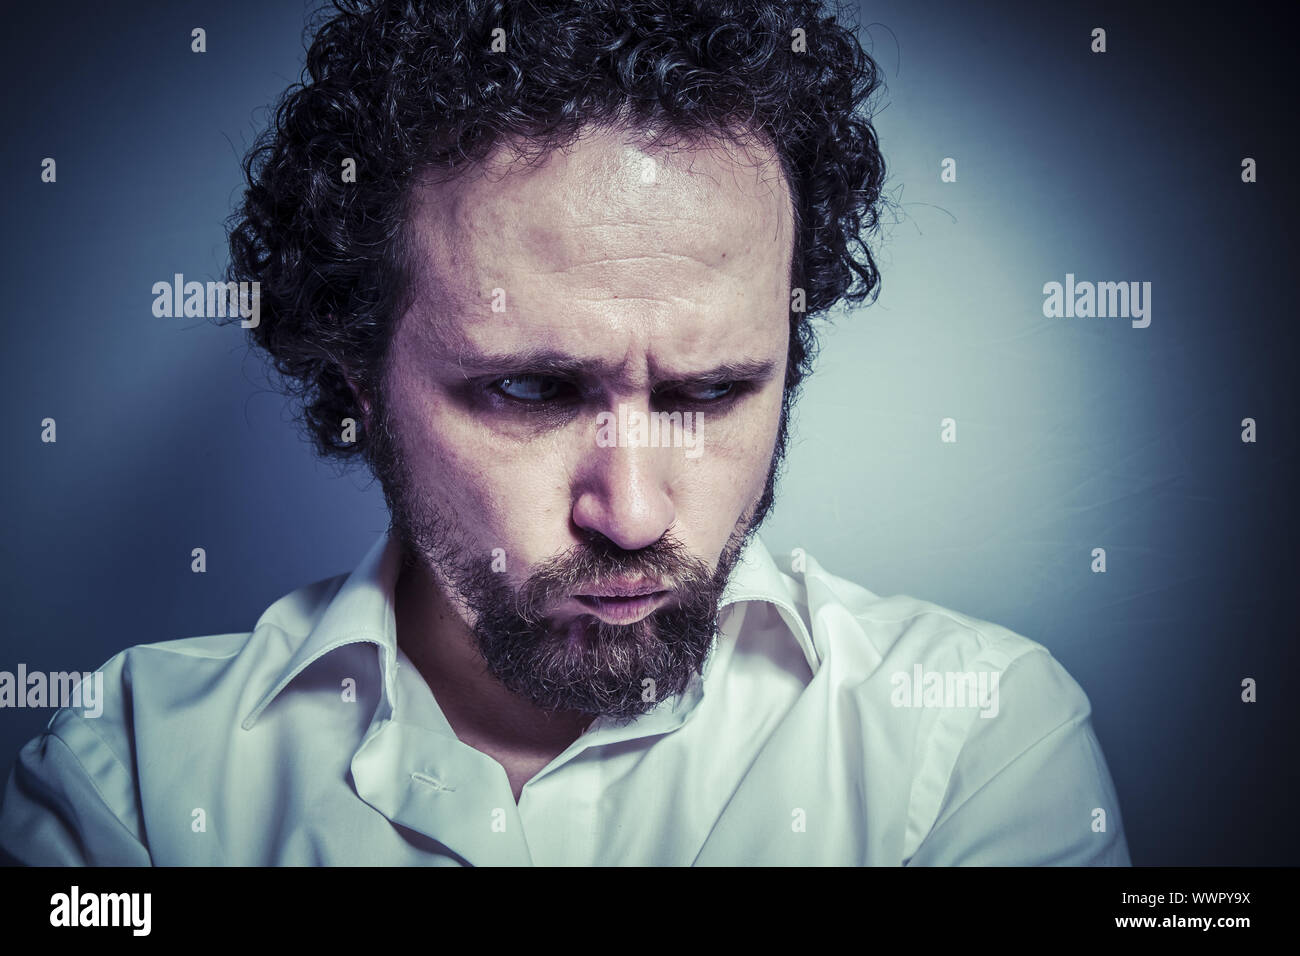 sad face, man with intense expression, white shirt Stock Photo